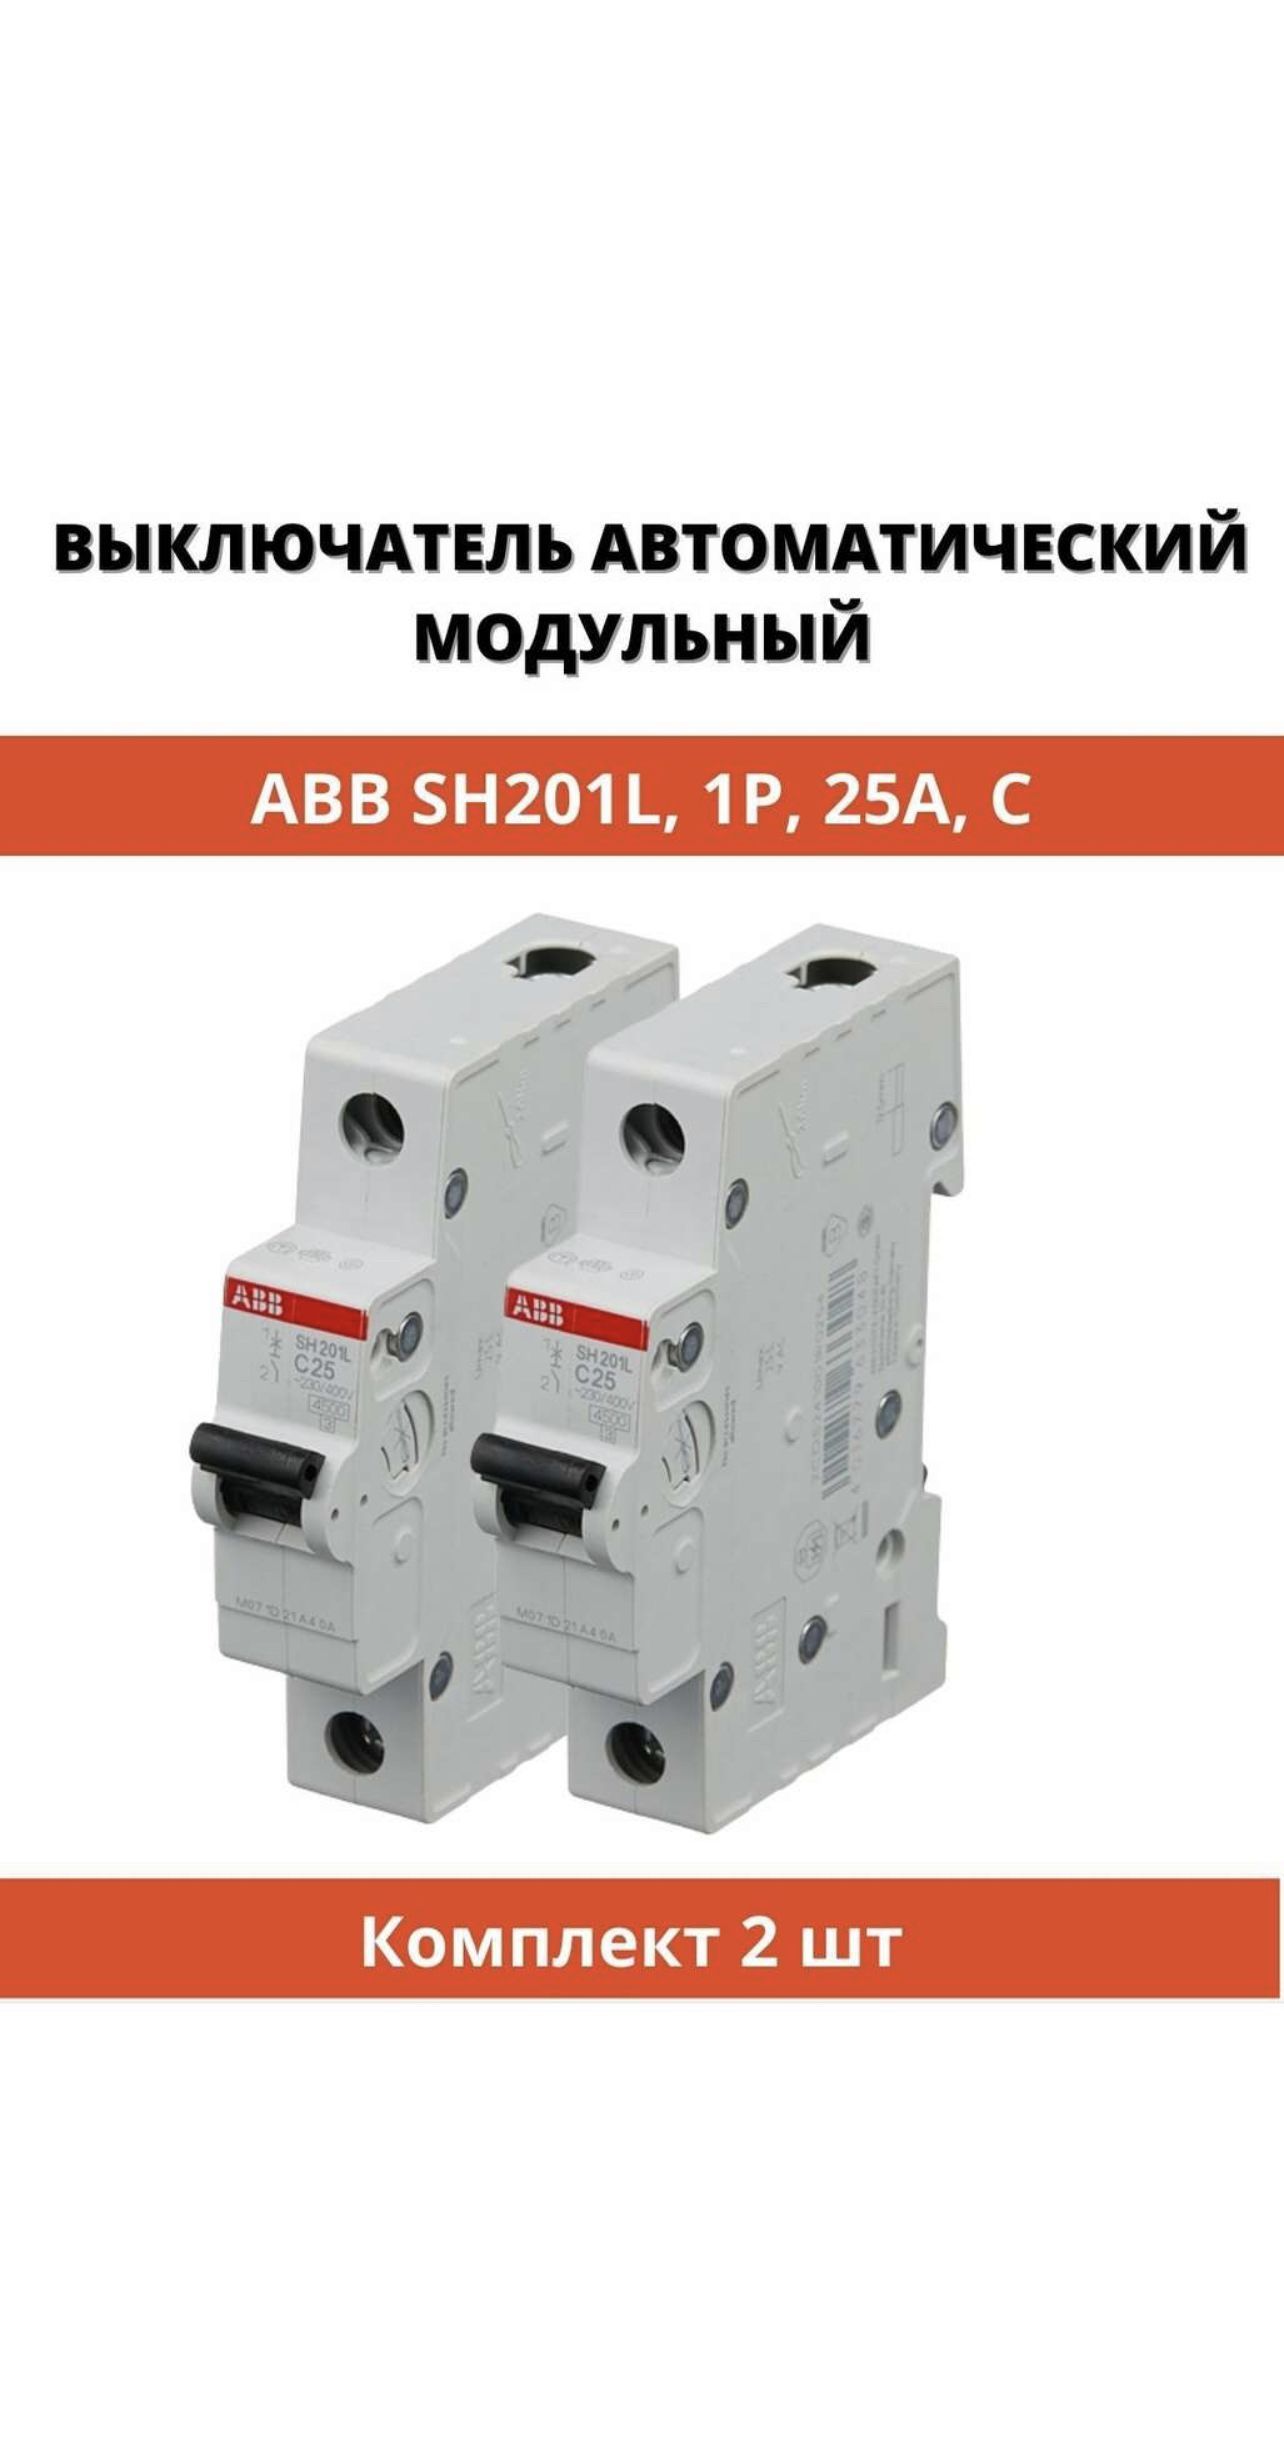 Автоматический выключатель sh201l. Автоматический модульный выключатель ABB 2п c sh202l 4.5ка 50а. Автомат ABB sh204 c63. АВВ sh201l c25. ABB sh200 25а.